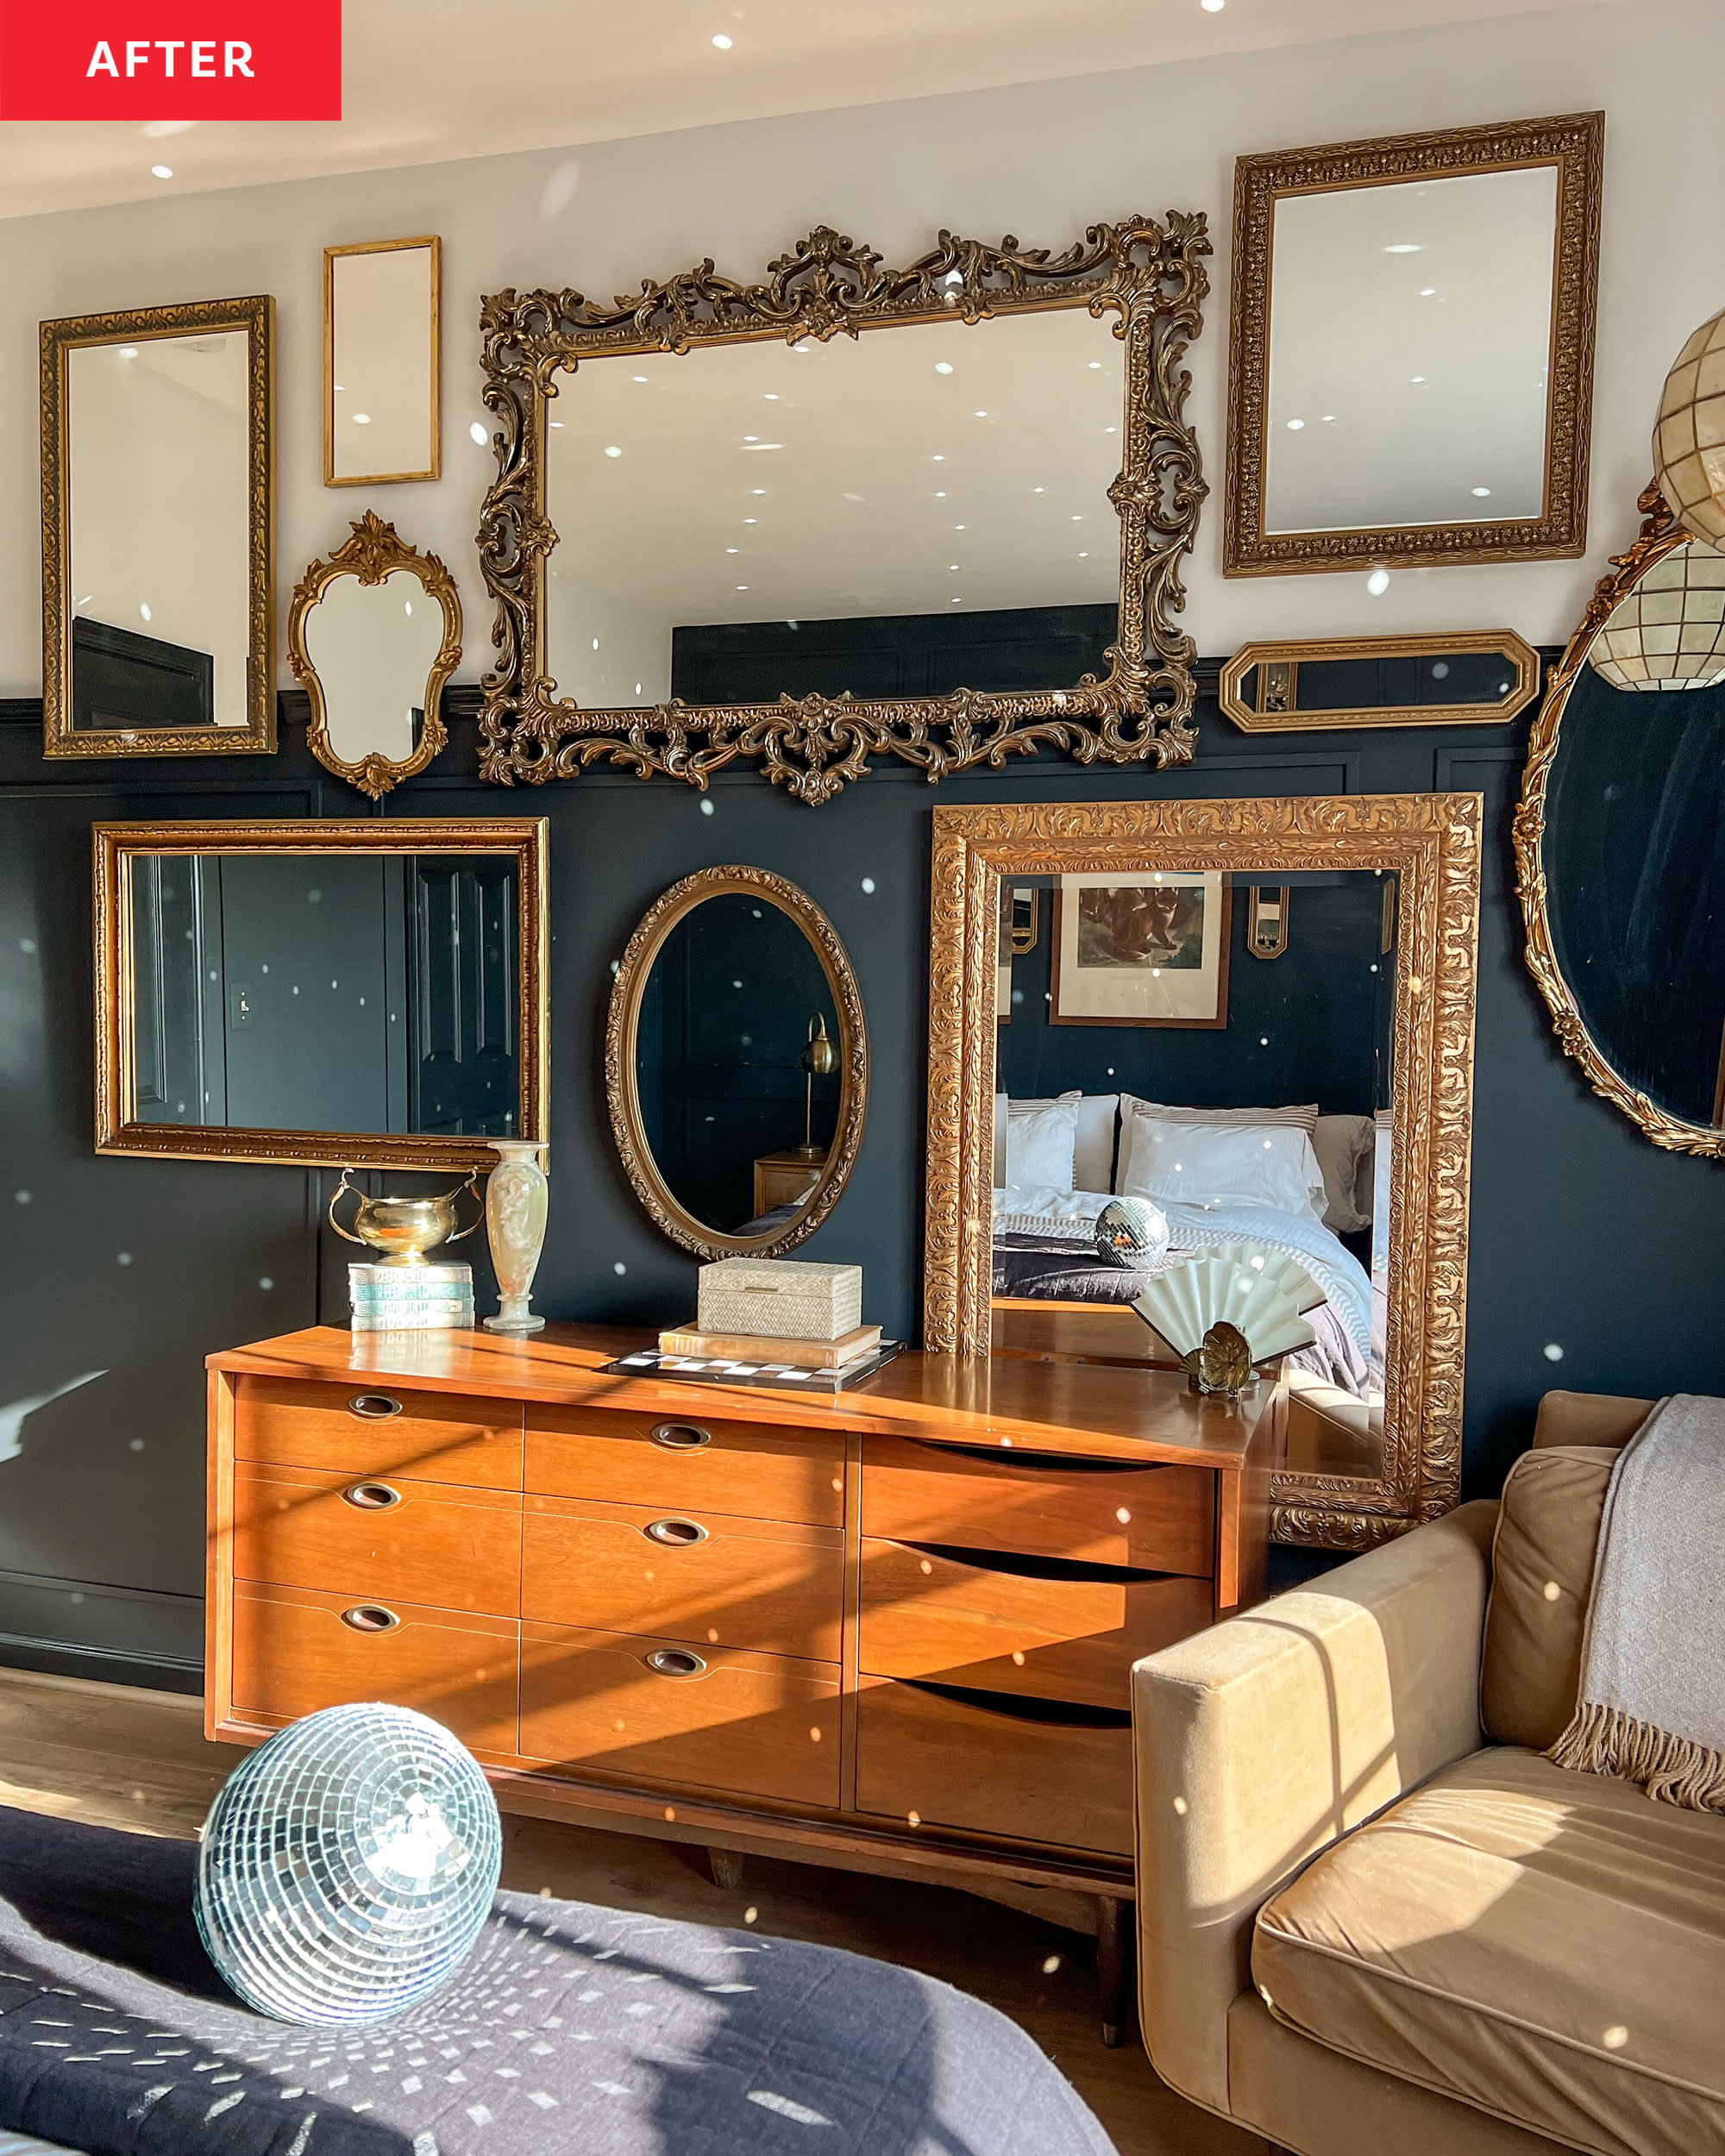 Amazon.com: KOHROS Art Decorative Wall Mirrors Large Grecian Venetian Mirror  for Hotel Home Vanity Sliver Mirror (W 24.8